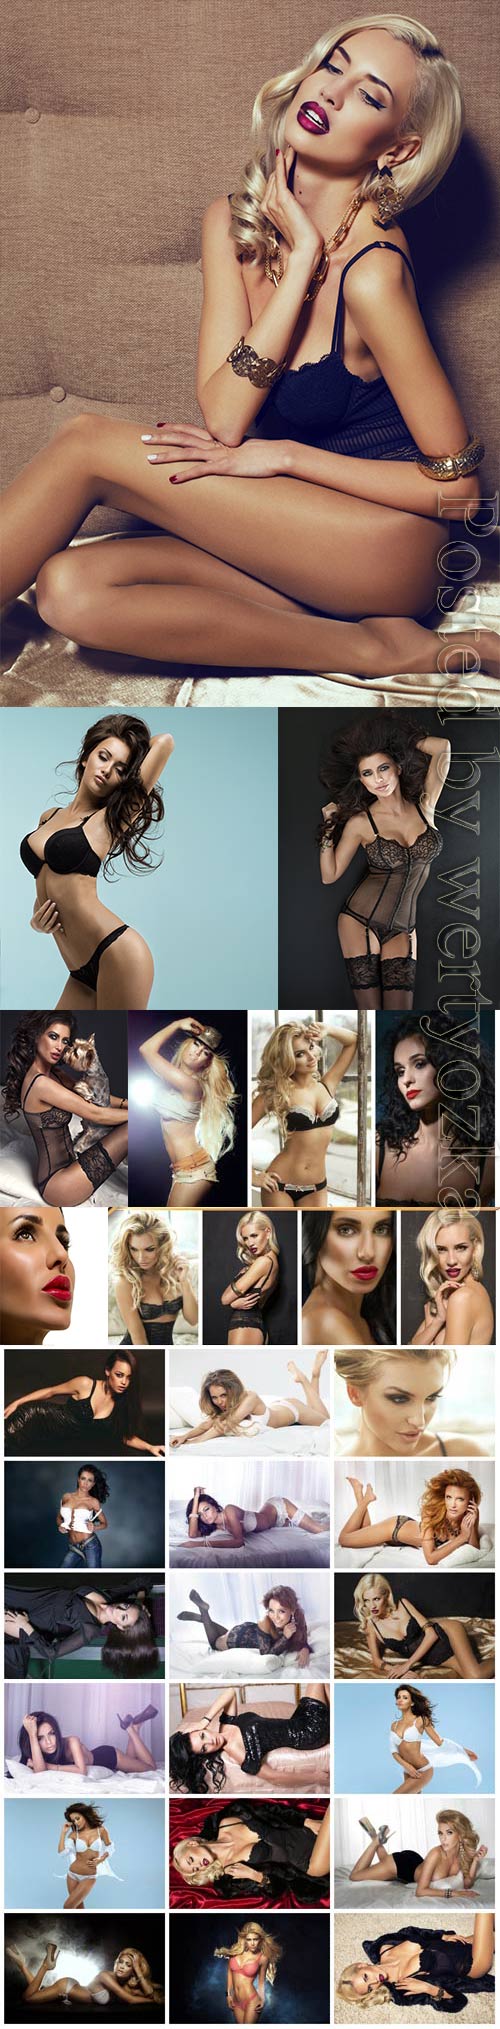 Luxury women in lingerie posing stock photo vol 20